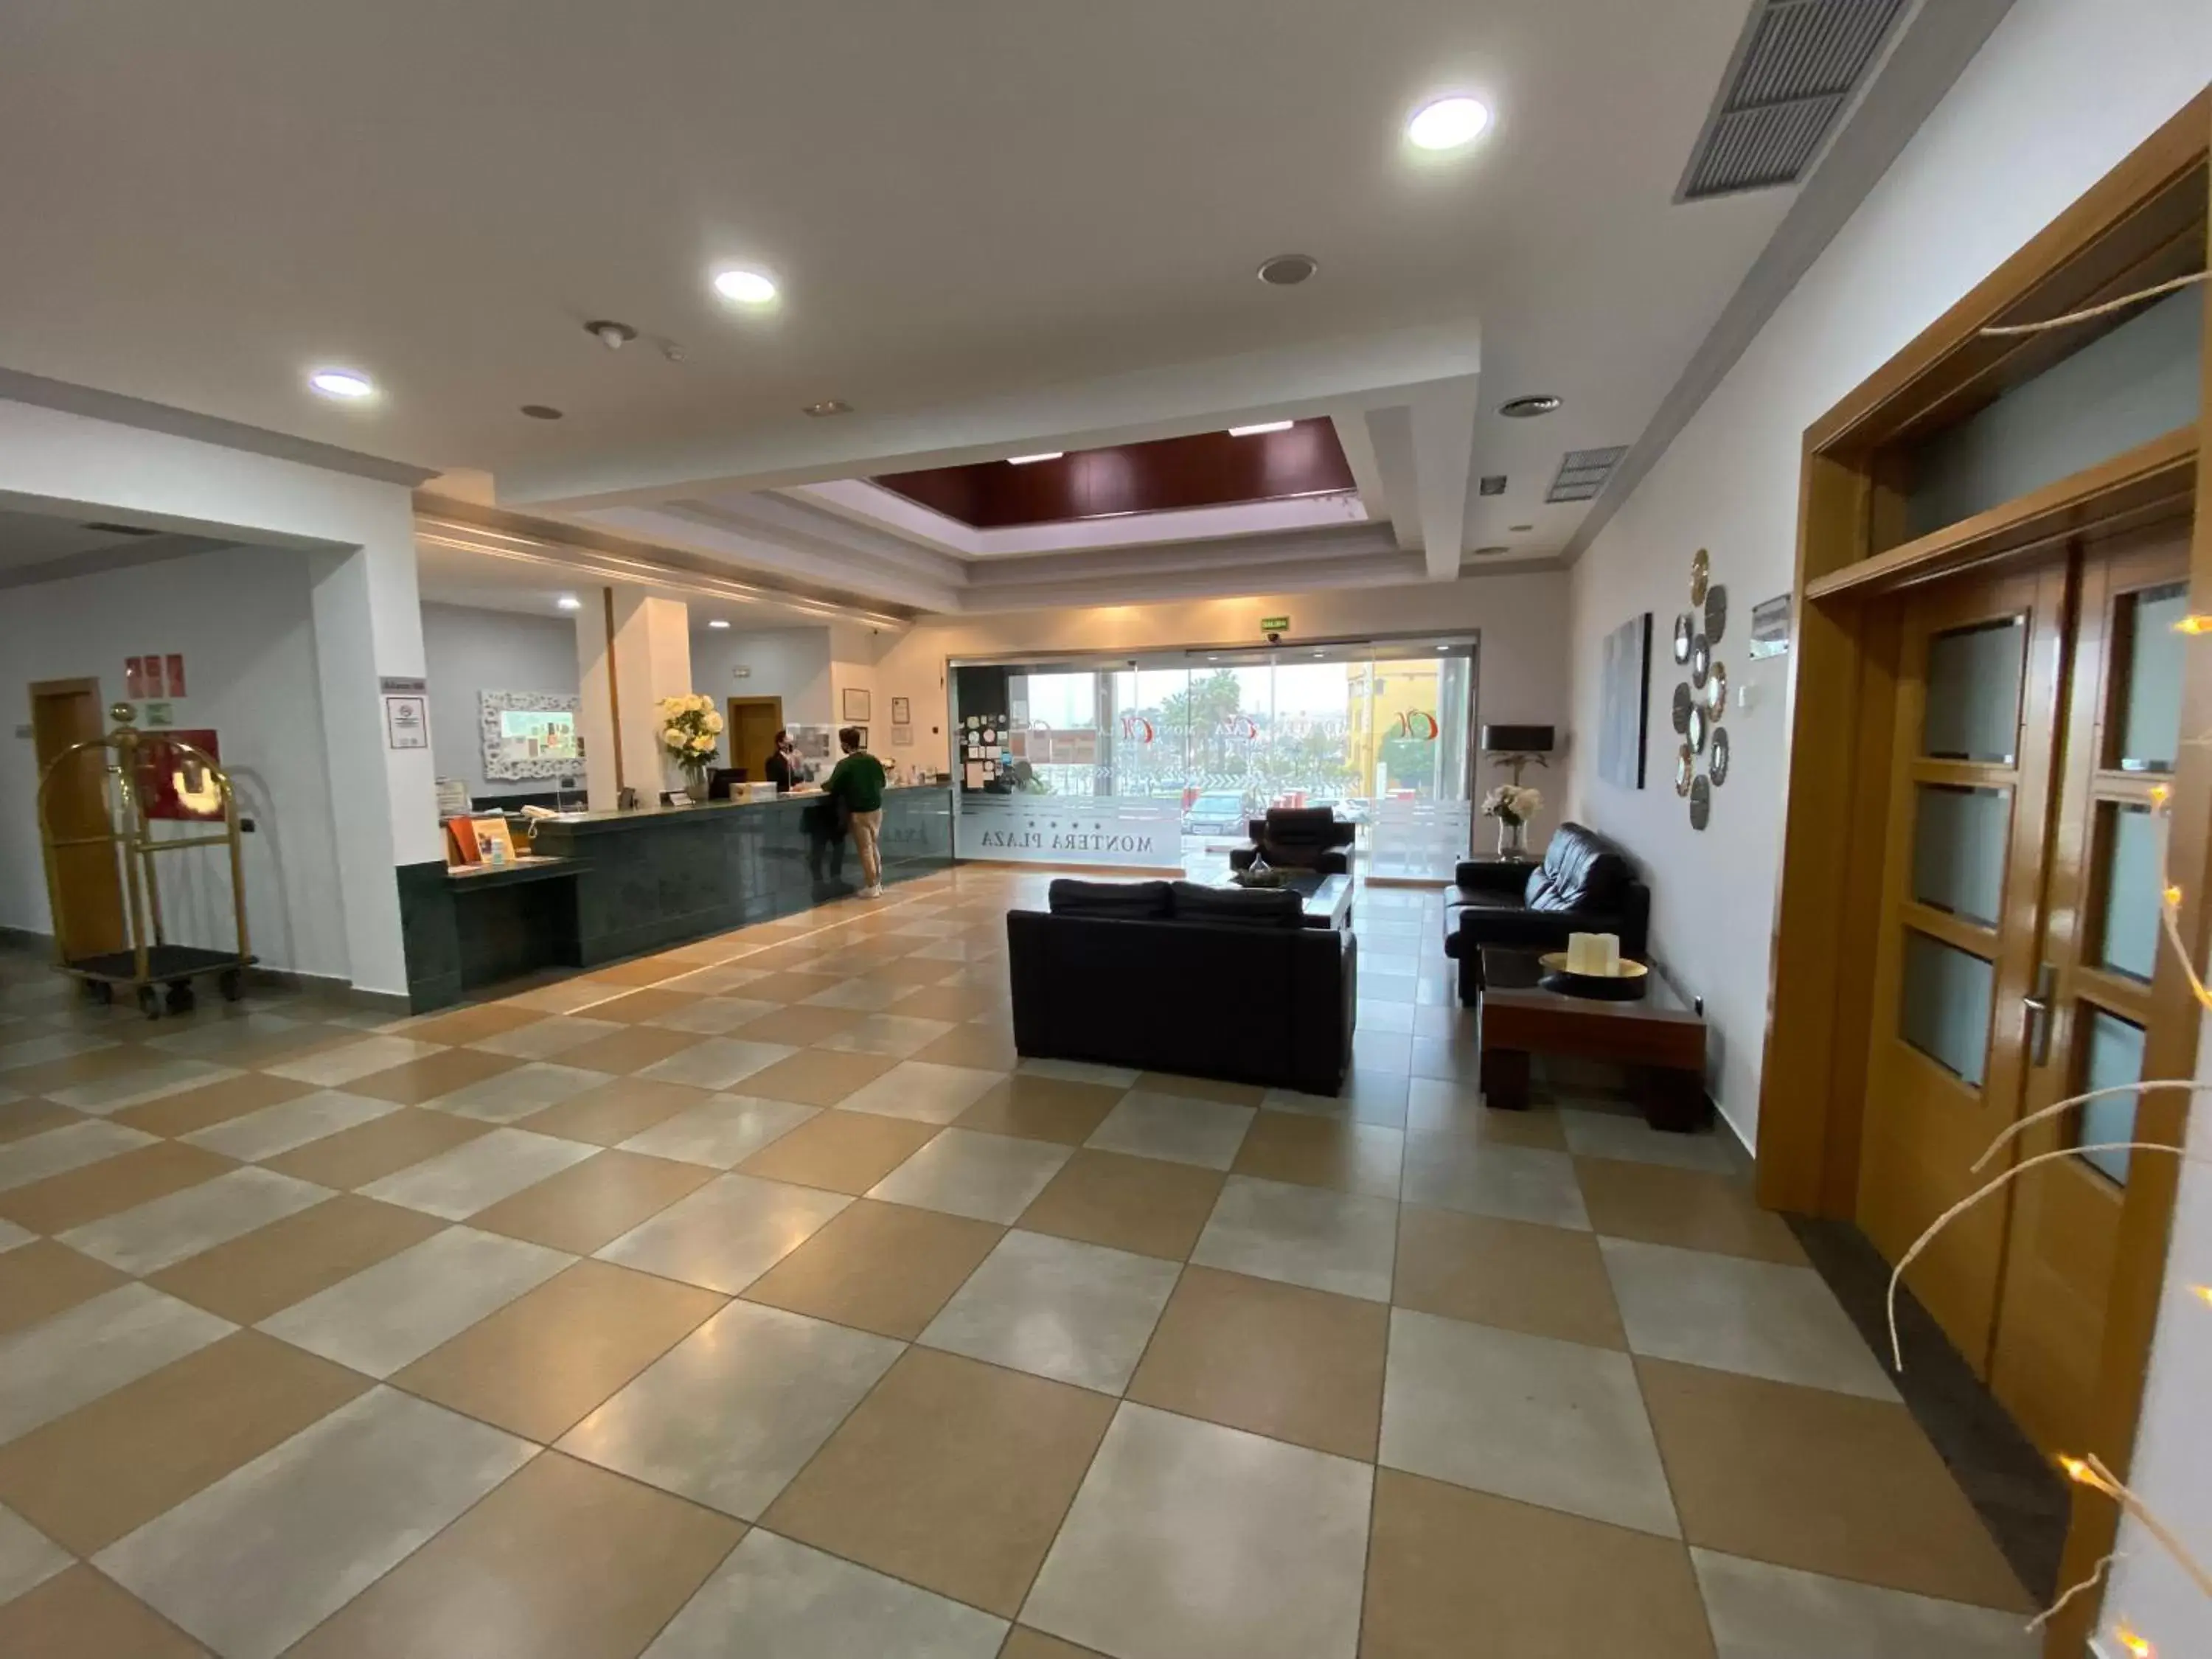 Lobby or reception, Lobby/Reception in Hotel Montera Plaza